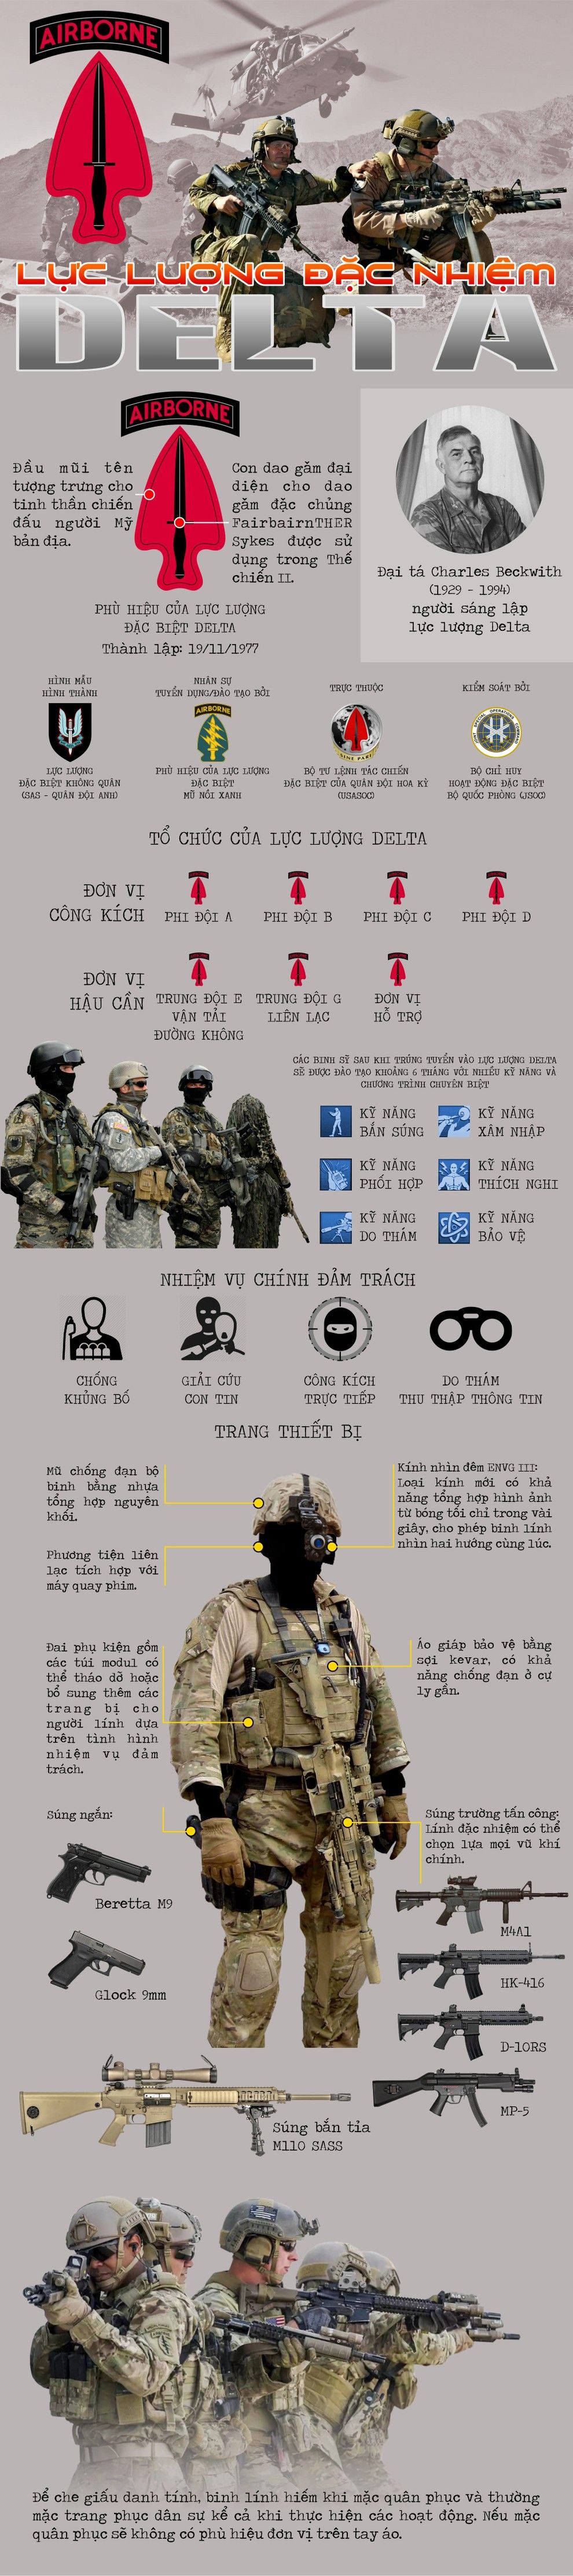 infographic luc luong dac nhiem delta da ha sat trum khung bo is bang cach nao